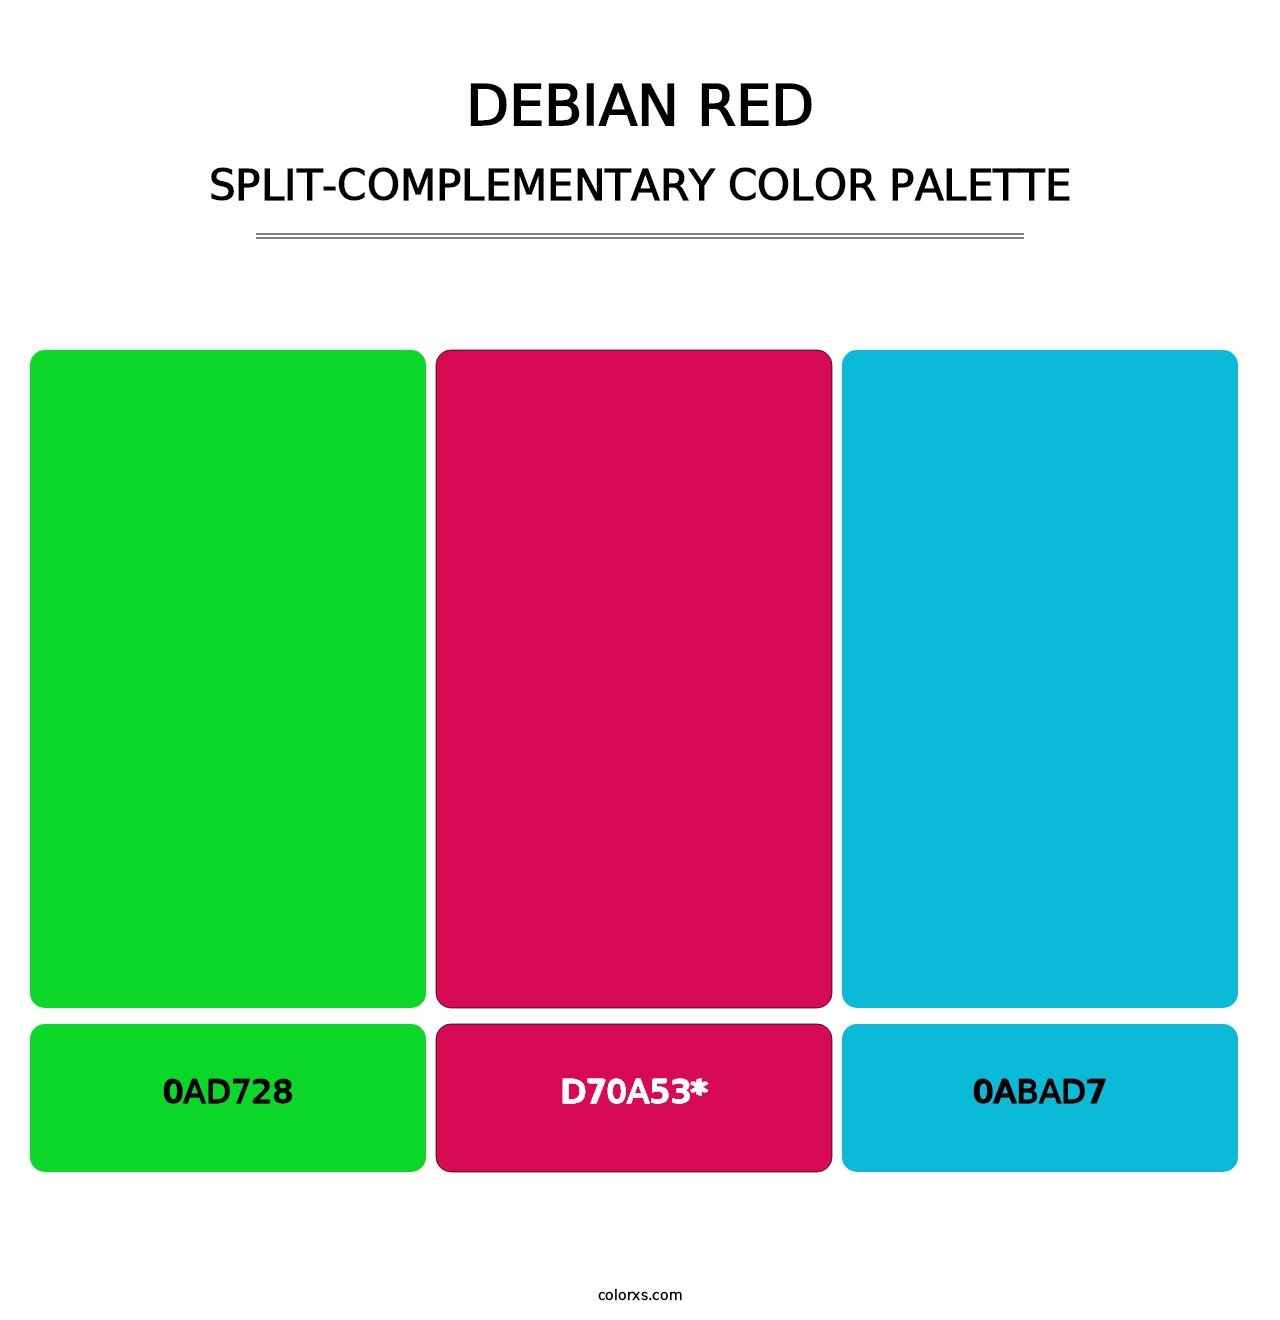 Debian red - Split-Complementary Color Palette